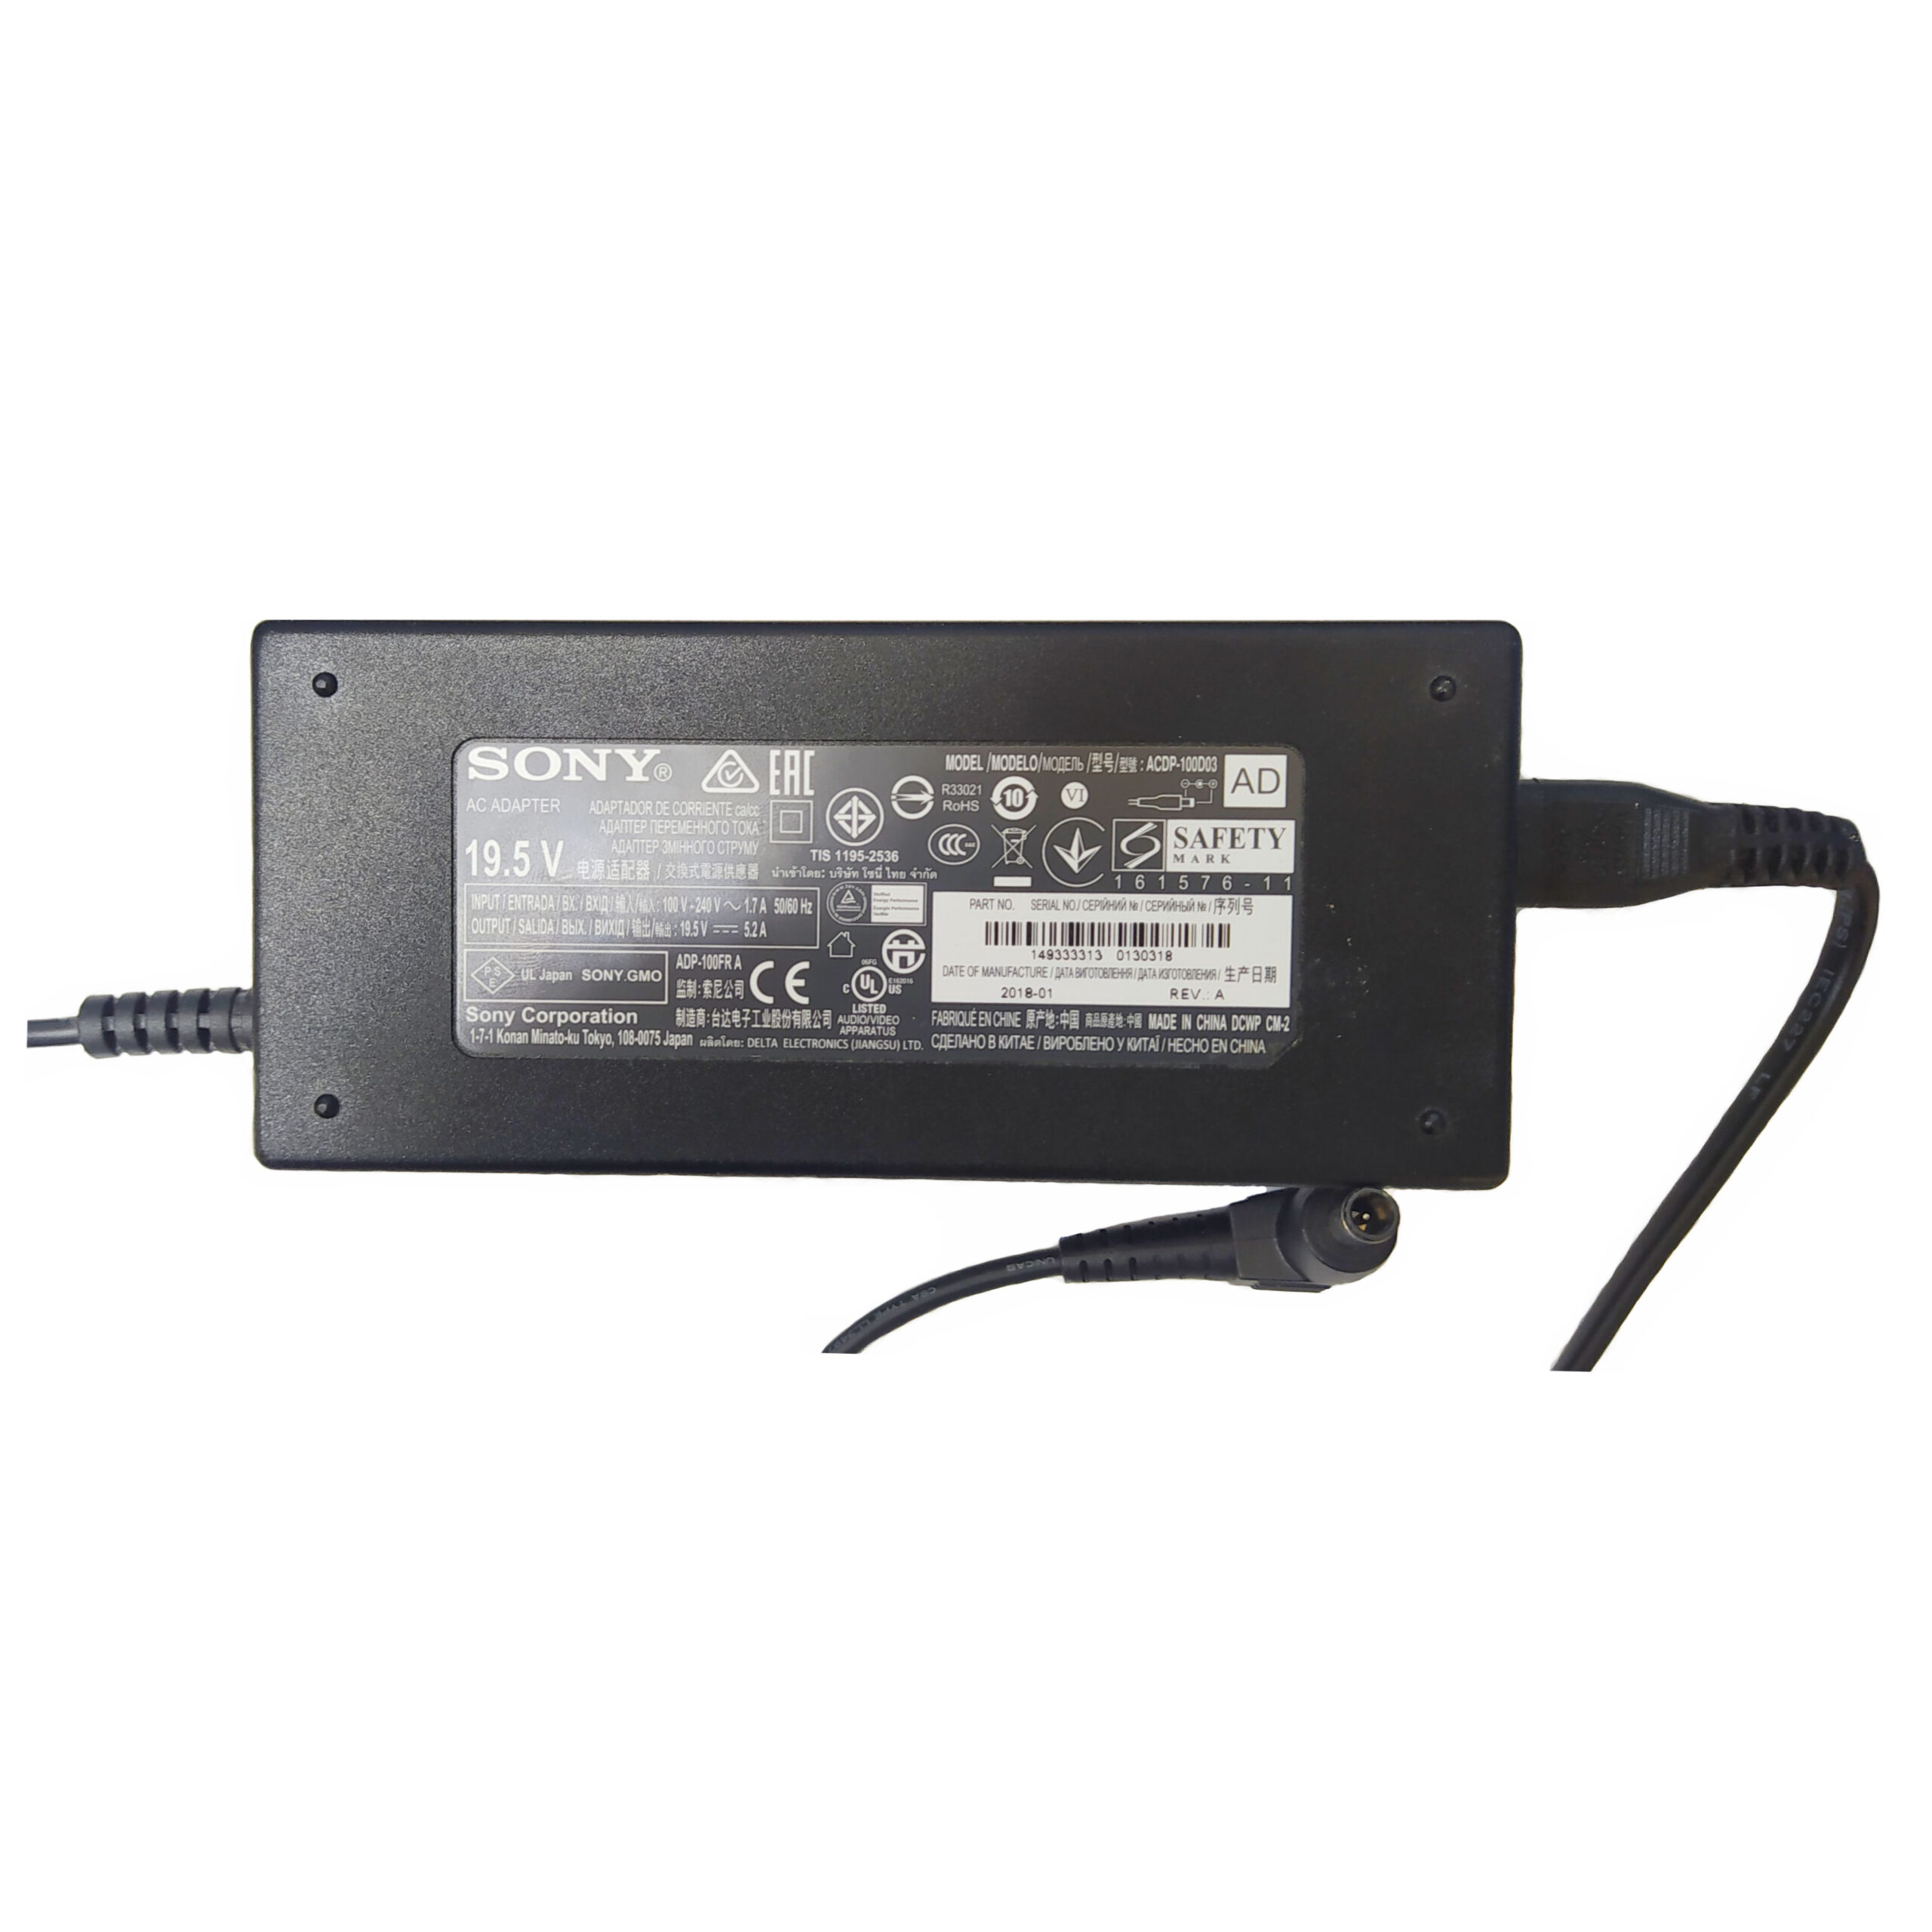 *Блок питания ACDP-100D03 (19.5V, 5.2A) для Sony KDL-49WE755 и др. 